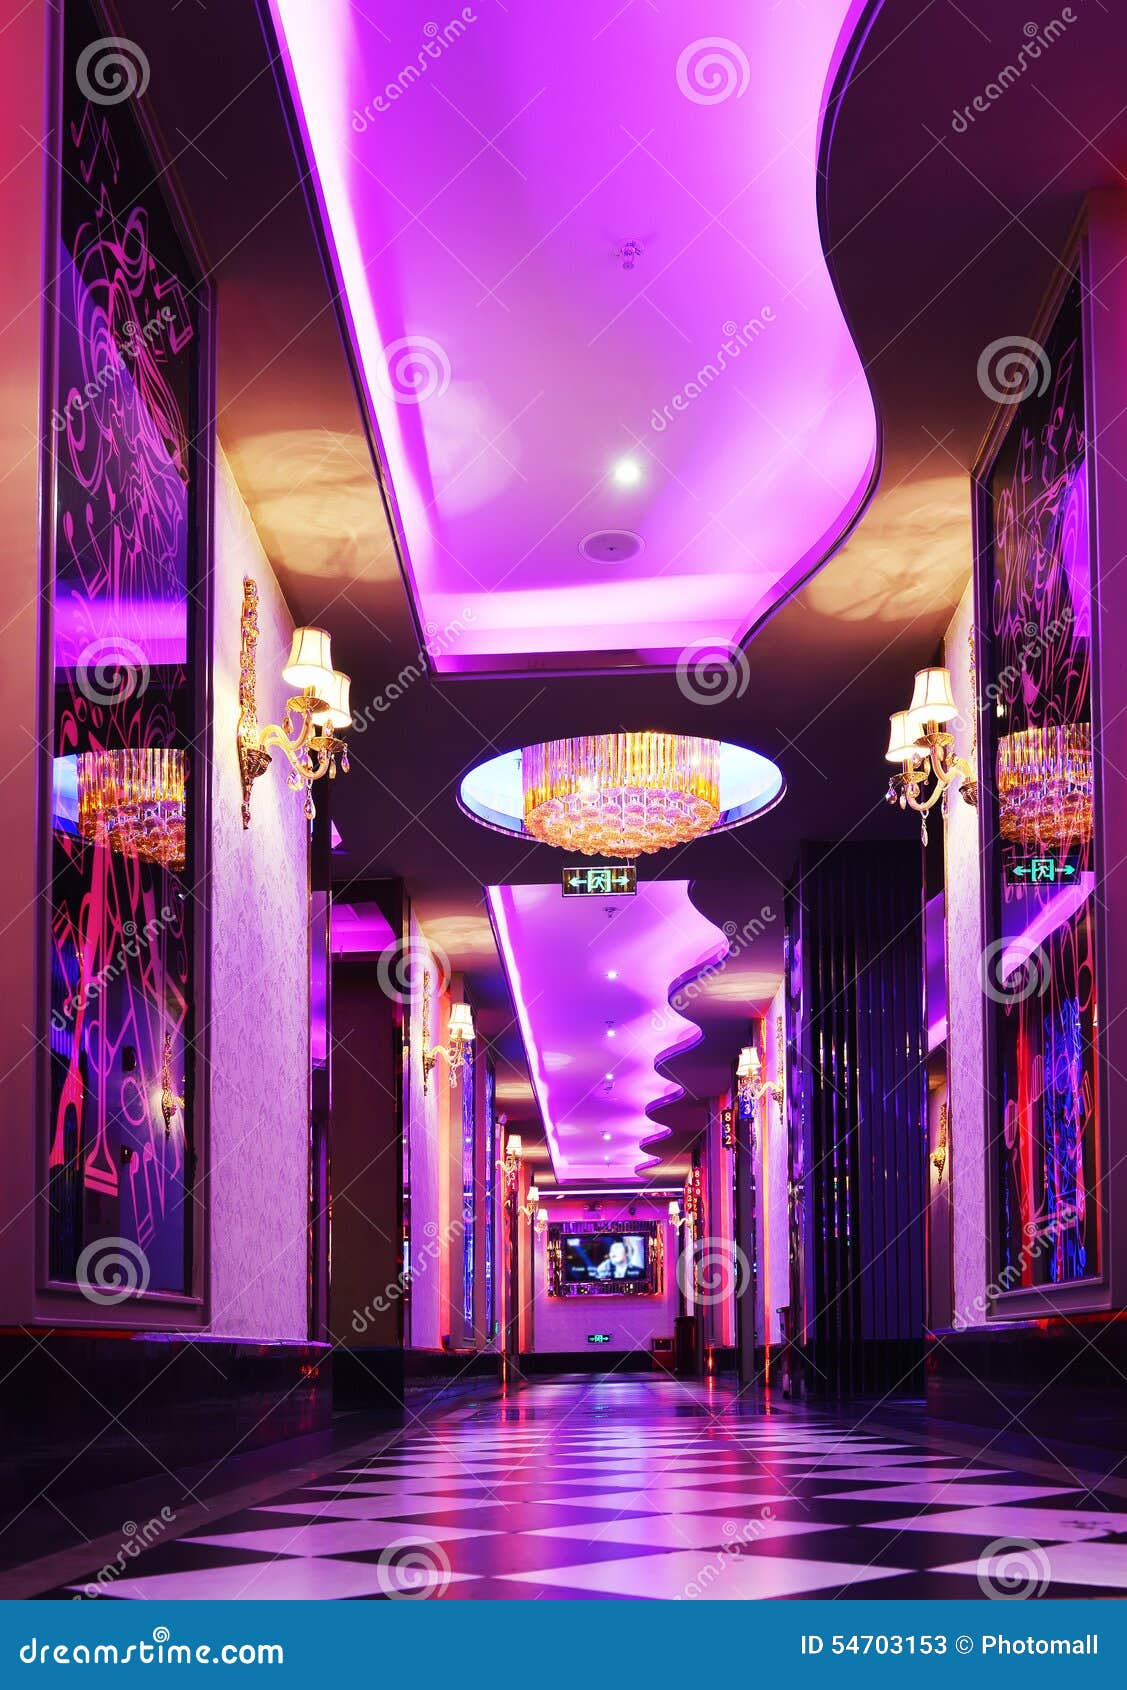 corridor in a luxury hotel